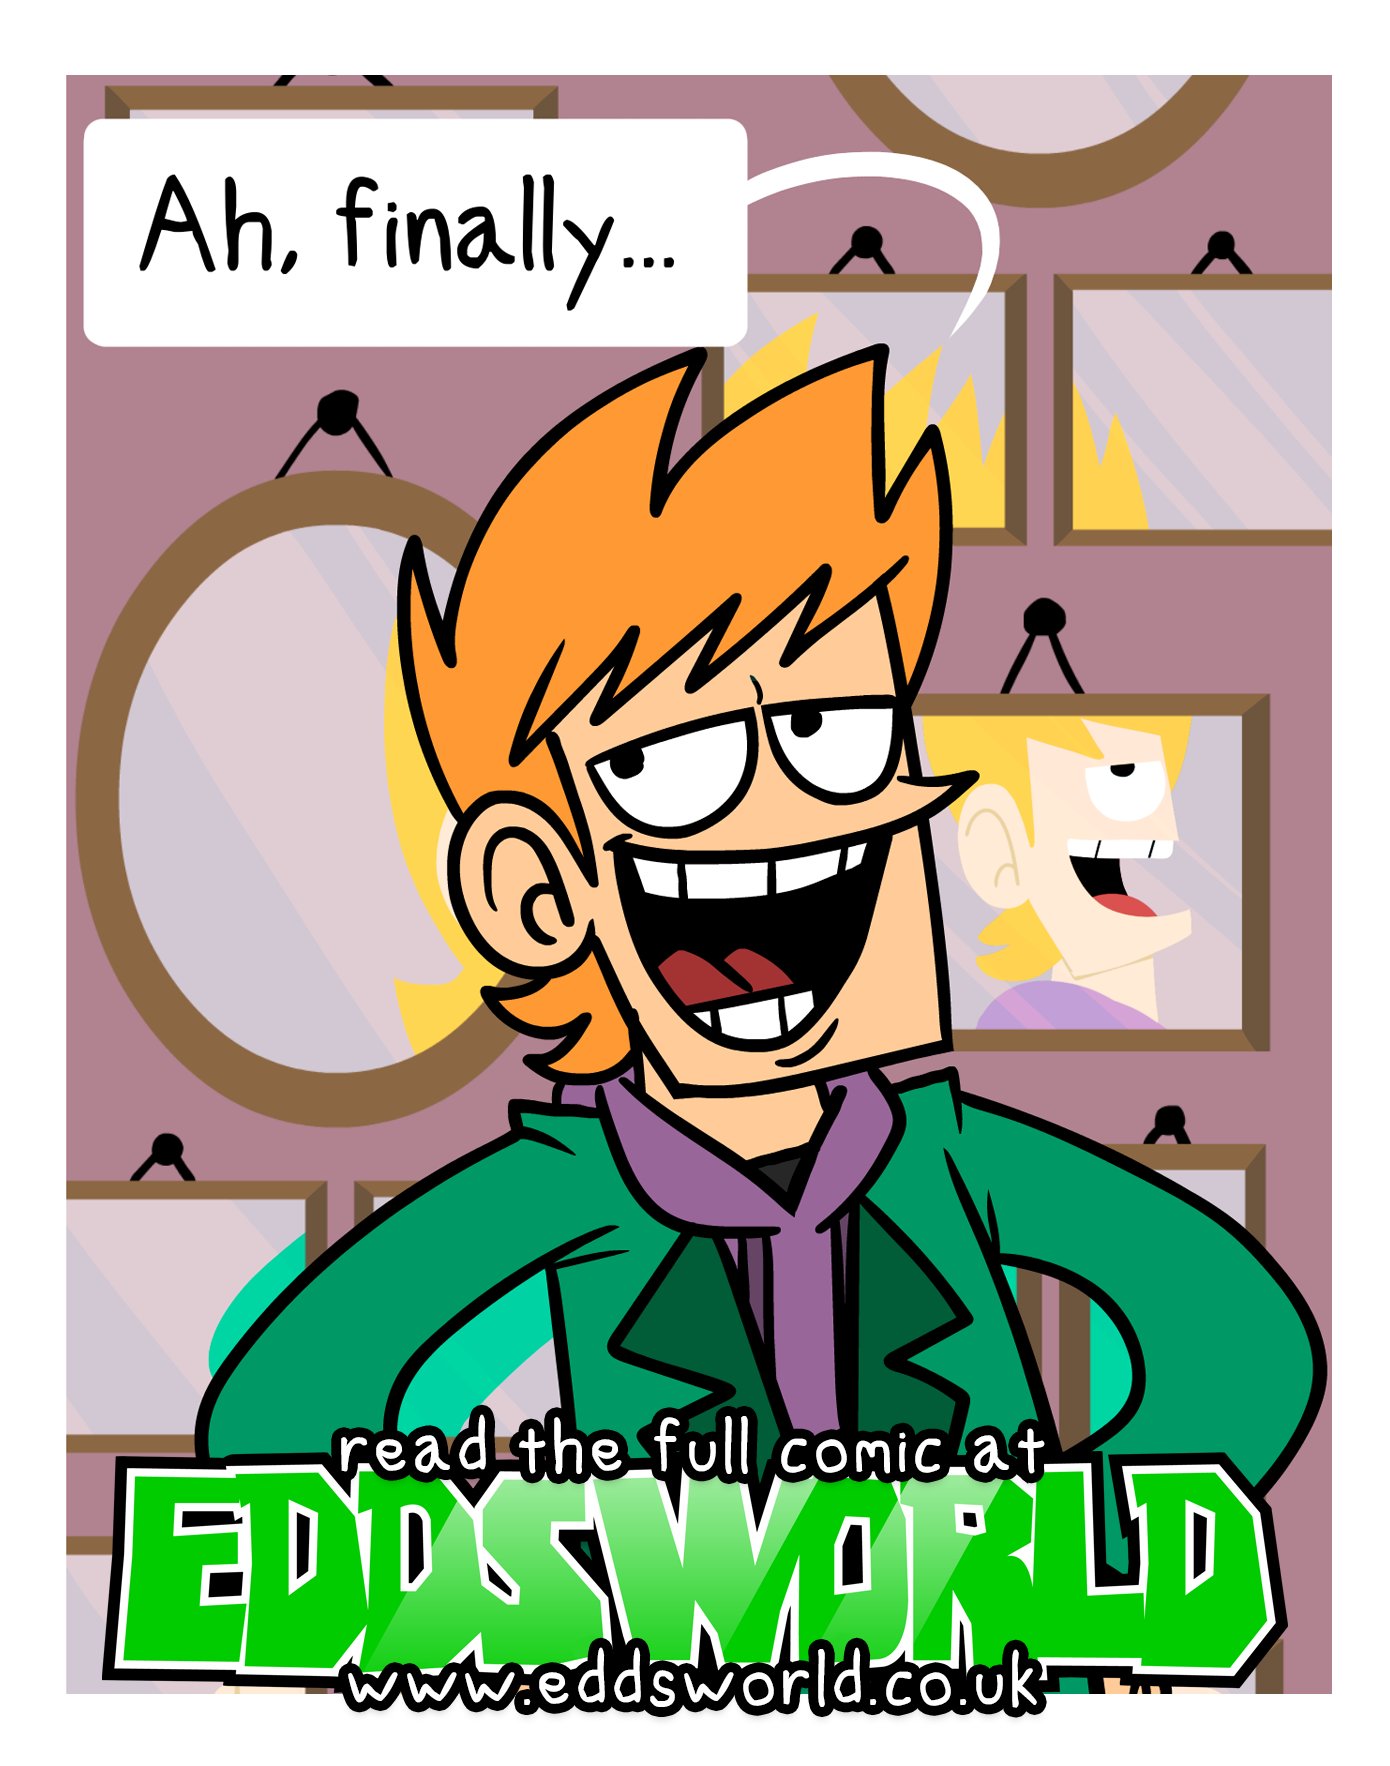 Eddsworld on X: NEW COMIC! Better pick that up Matt! ☎️ Read